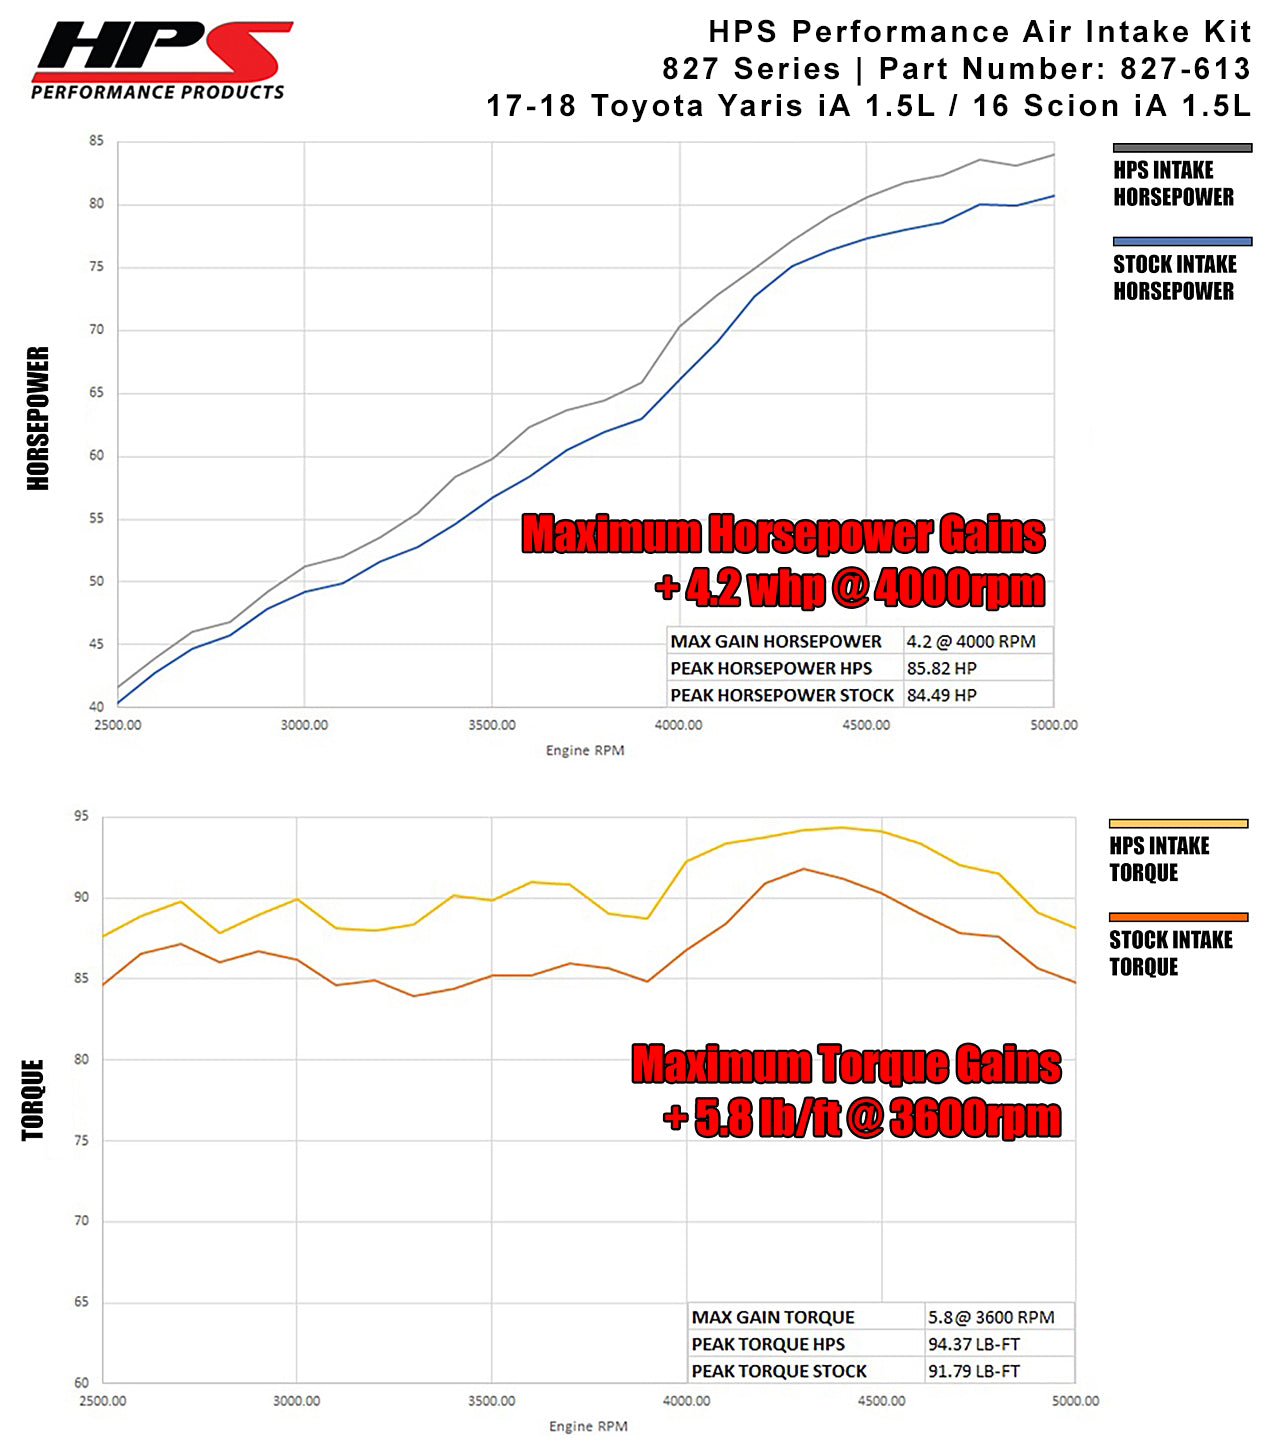 Dyno proven increase horsepower 4.2 whp torque 5.8 ft/lb HPS Shortram Cold Air Intake Kit 2017-2018 Toyota Yaris iA 1.5L 827-613